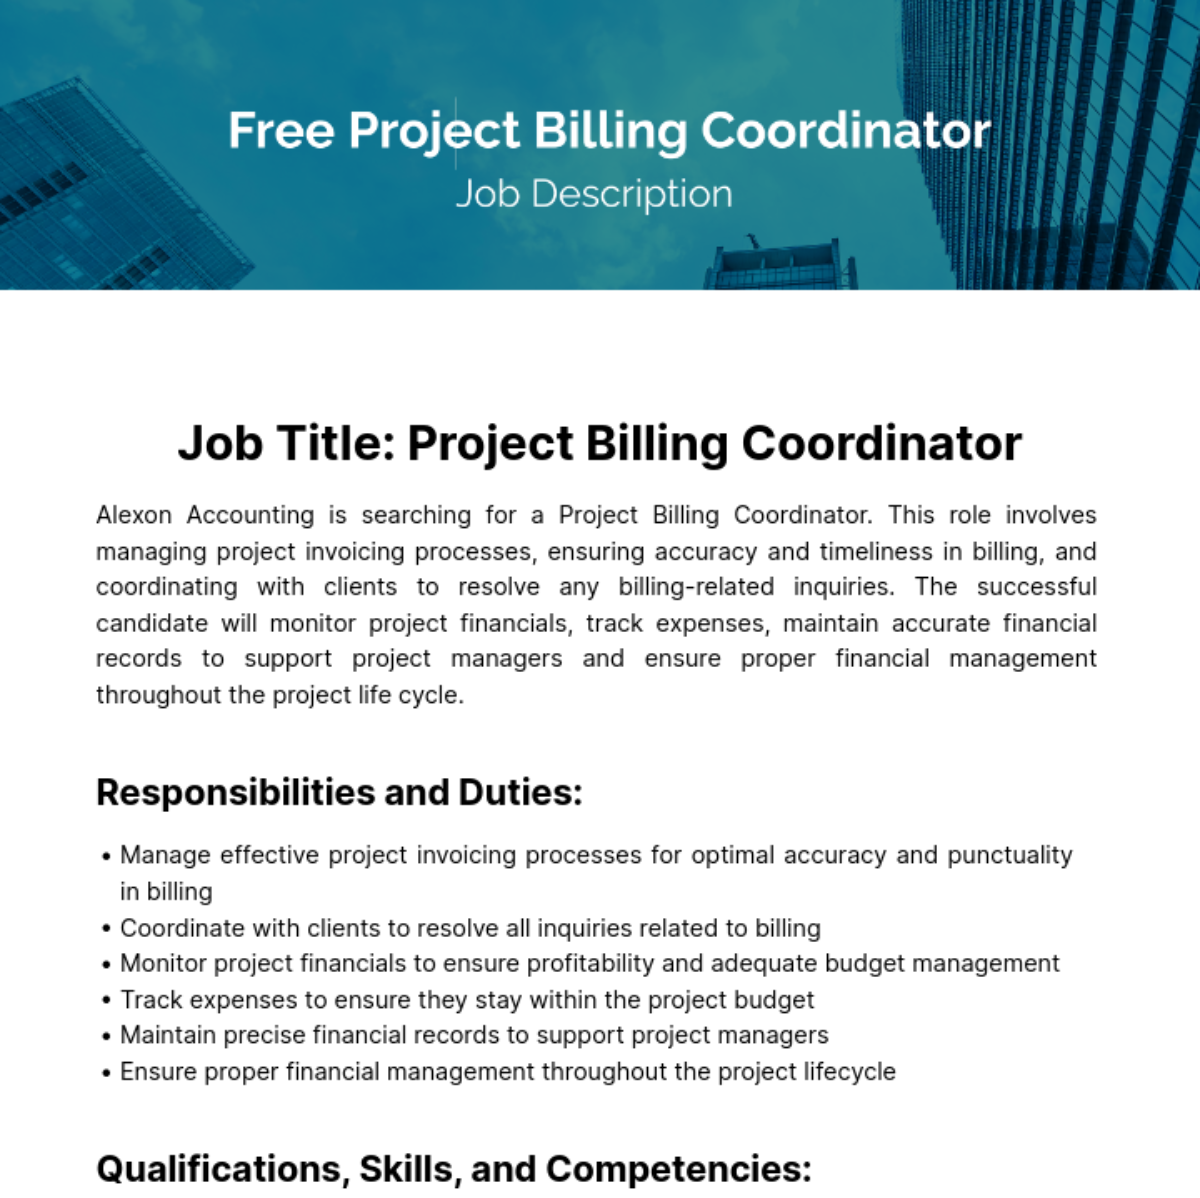 Free Project Billing Coordinator Job Description Template